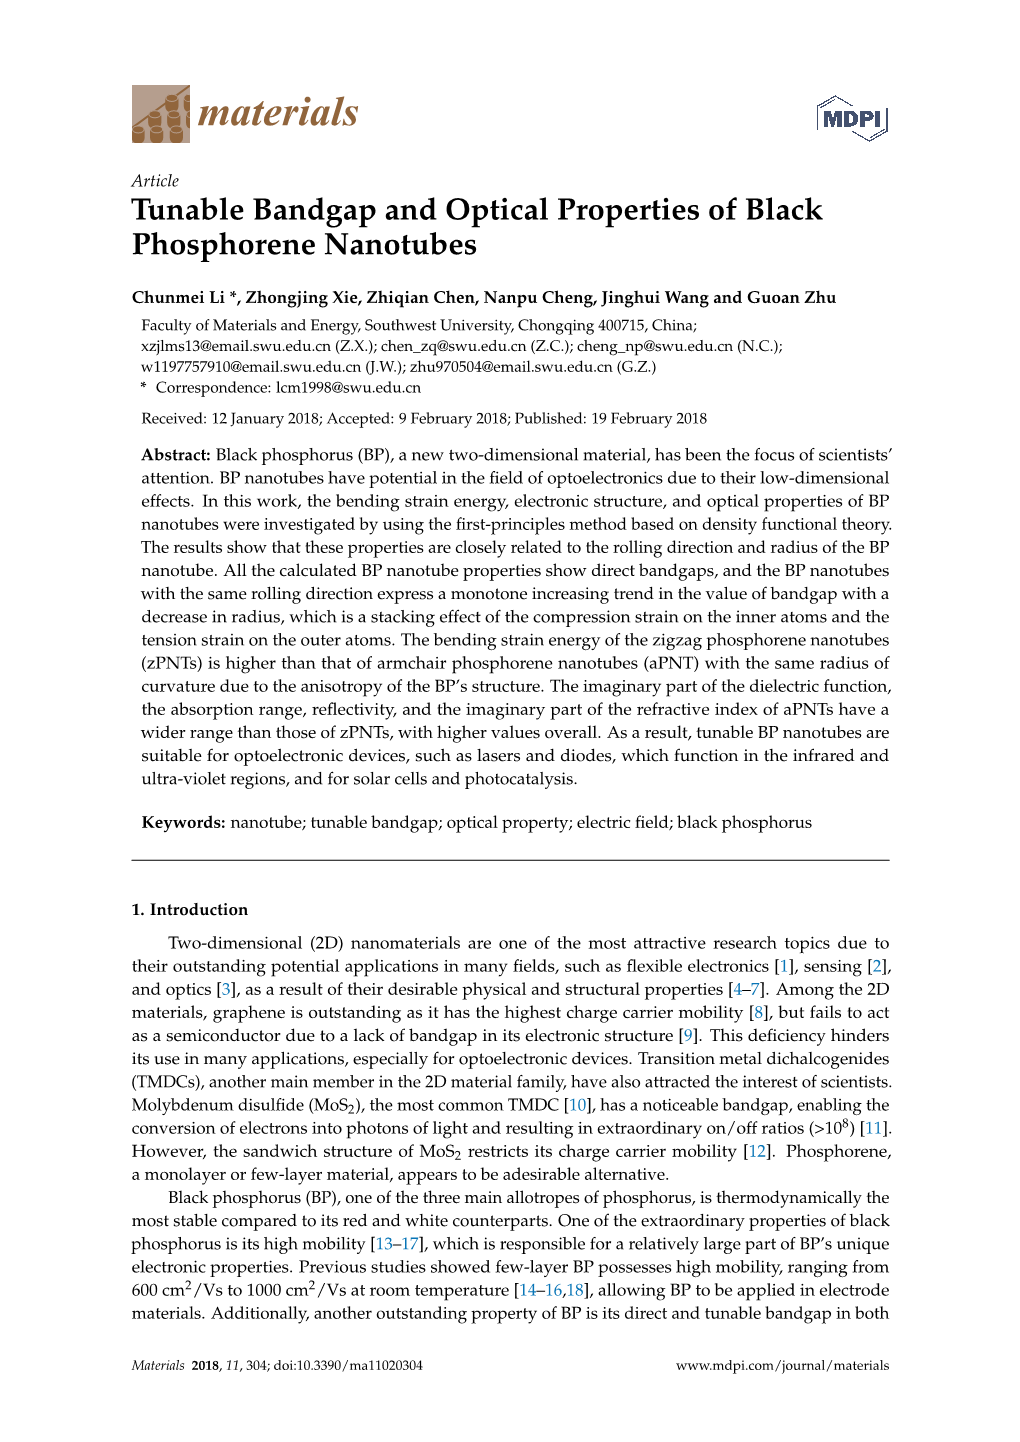 Tunable Bandgap and Optical Properties of Black Phosphorene Nanotubes